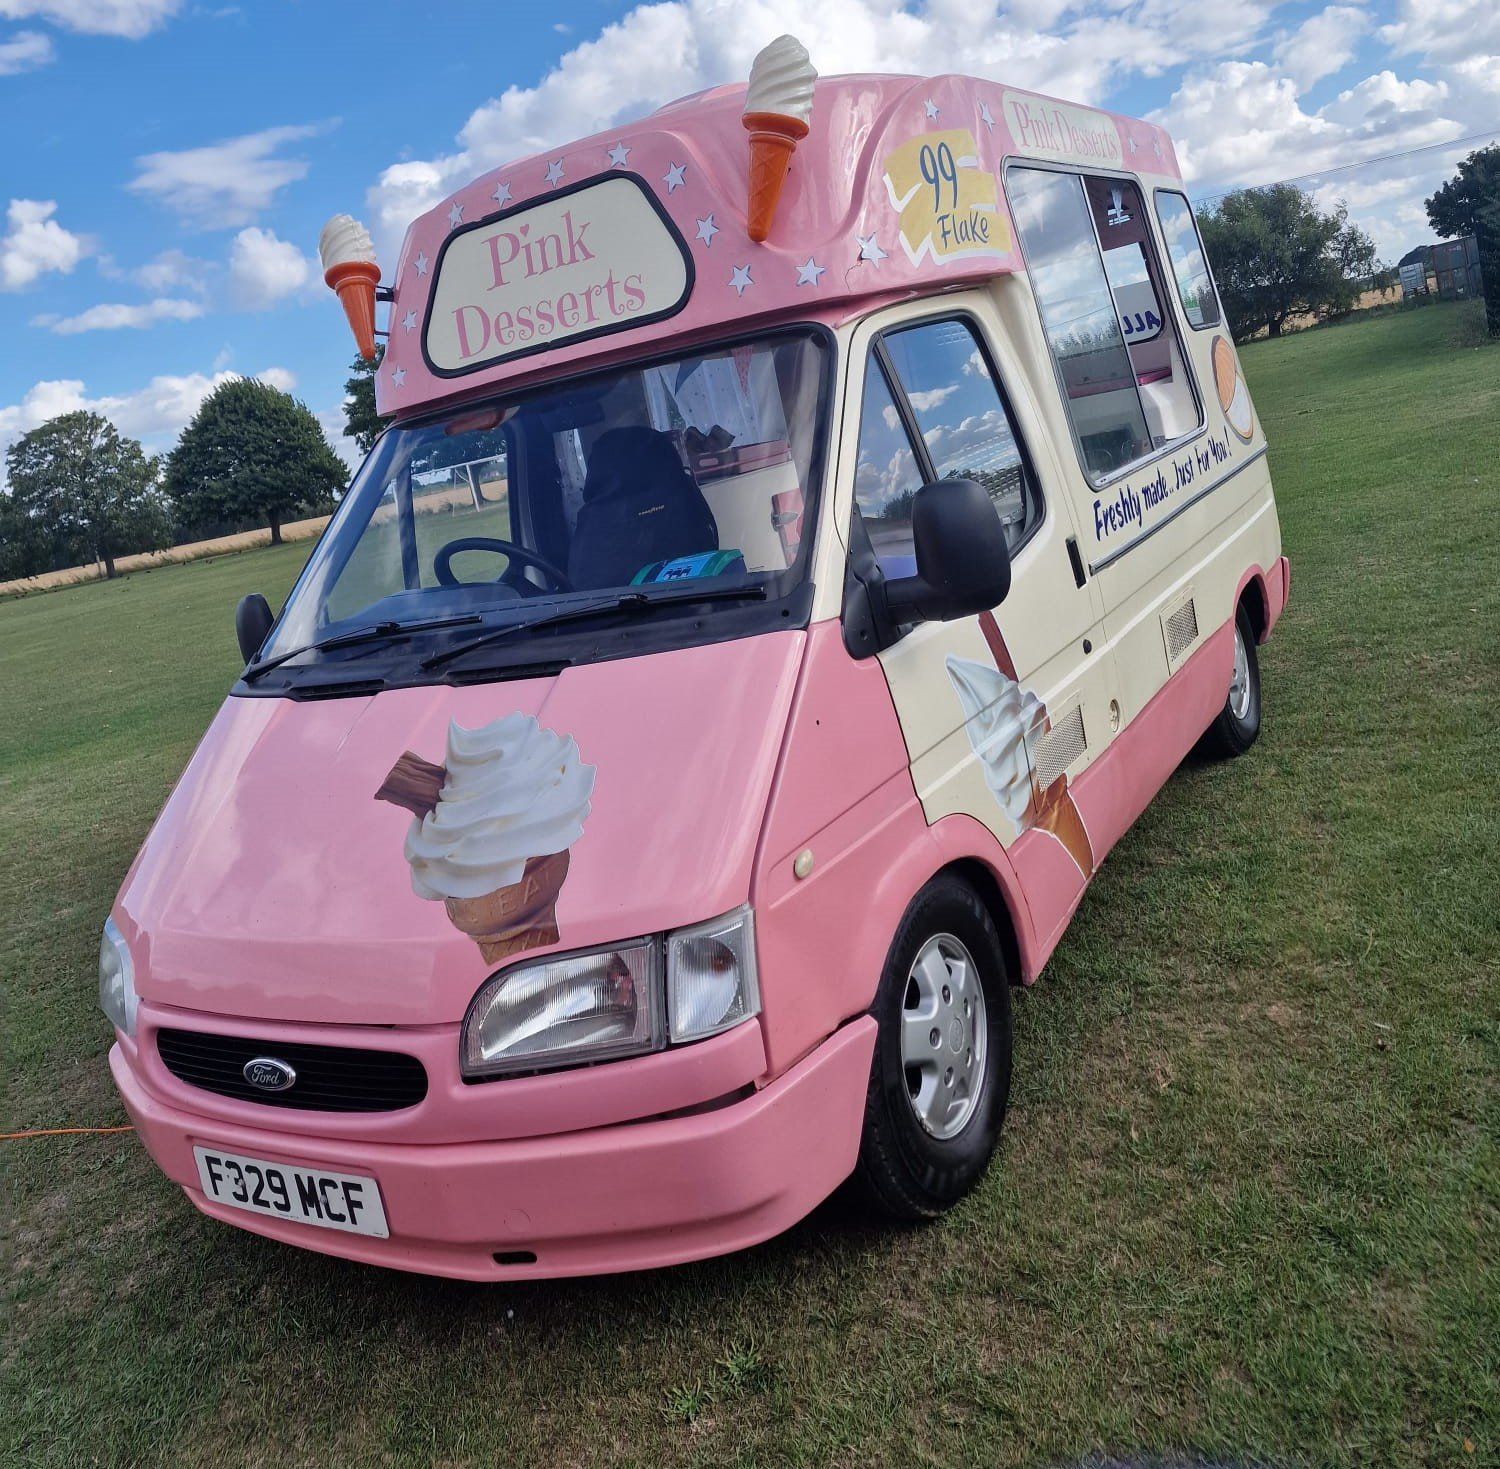 Pink Desserts - Vintage Ice Cream Van Hire - Wedding Ice Cream - Event Catering